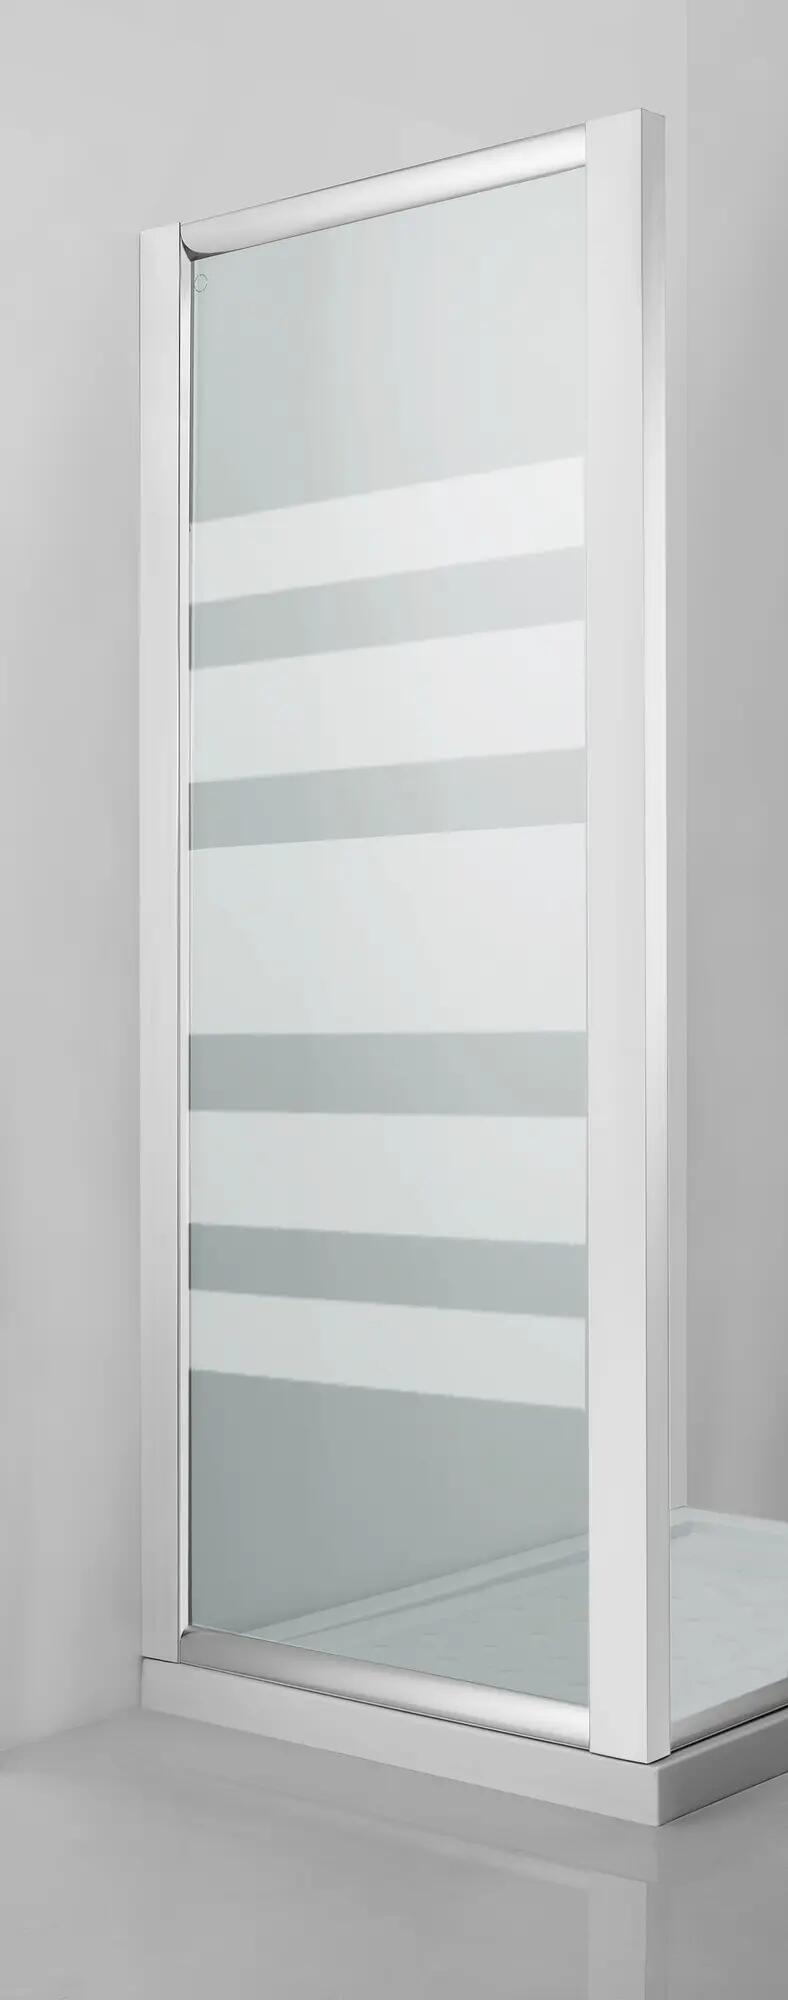 Mampara pokaak serigrafiado perfil blanco 80x185 cm